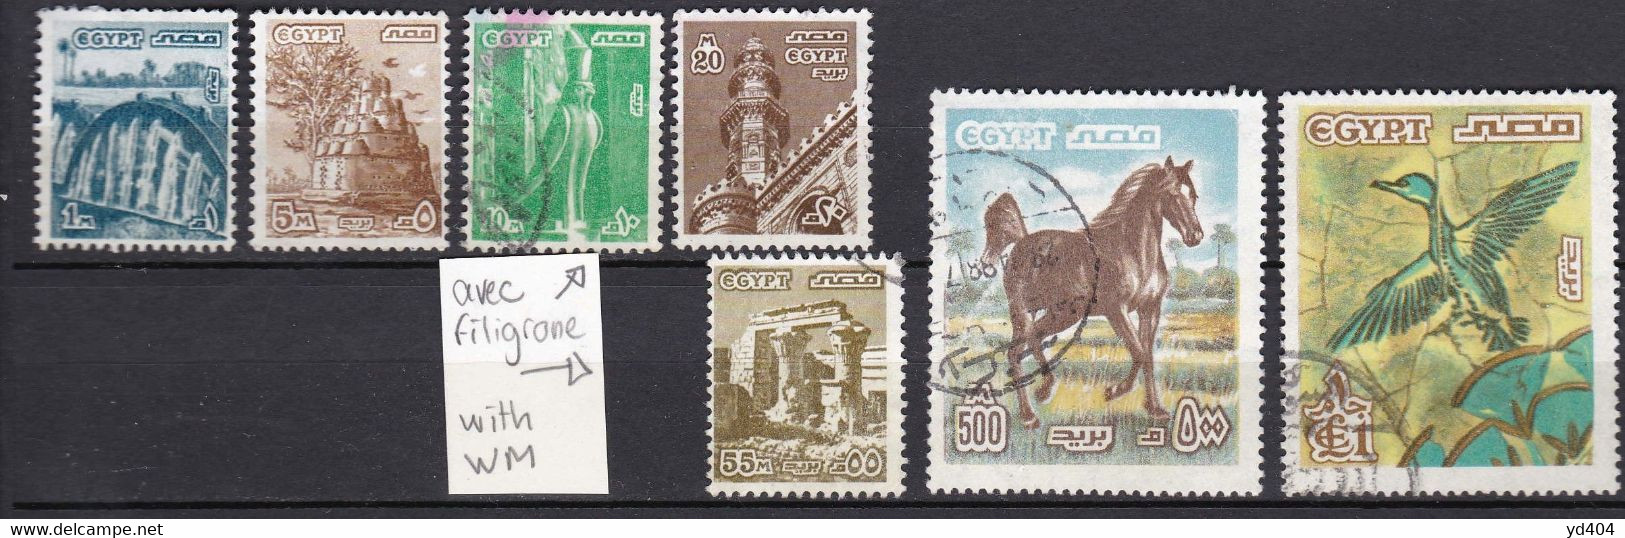 EG150 – EGYPTE – EGYPT – 1978 - USED SET - CV 15 € - Usados